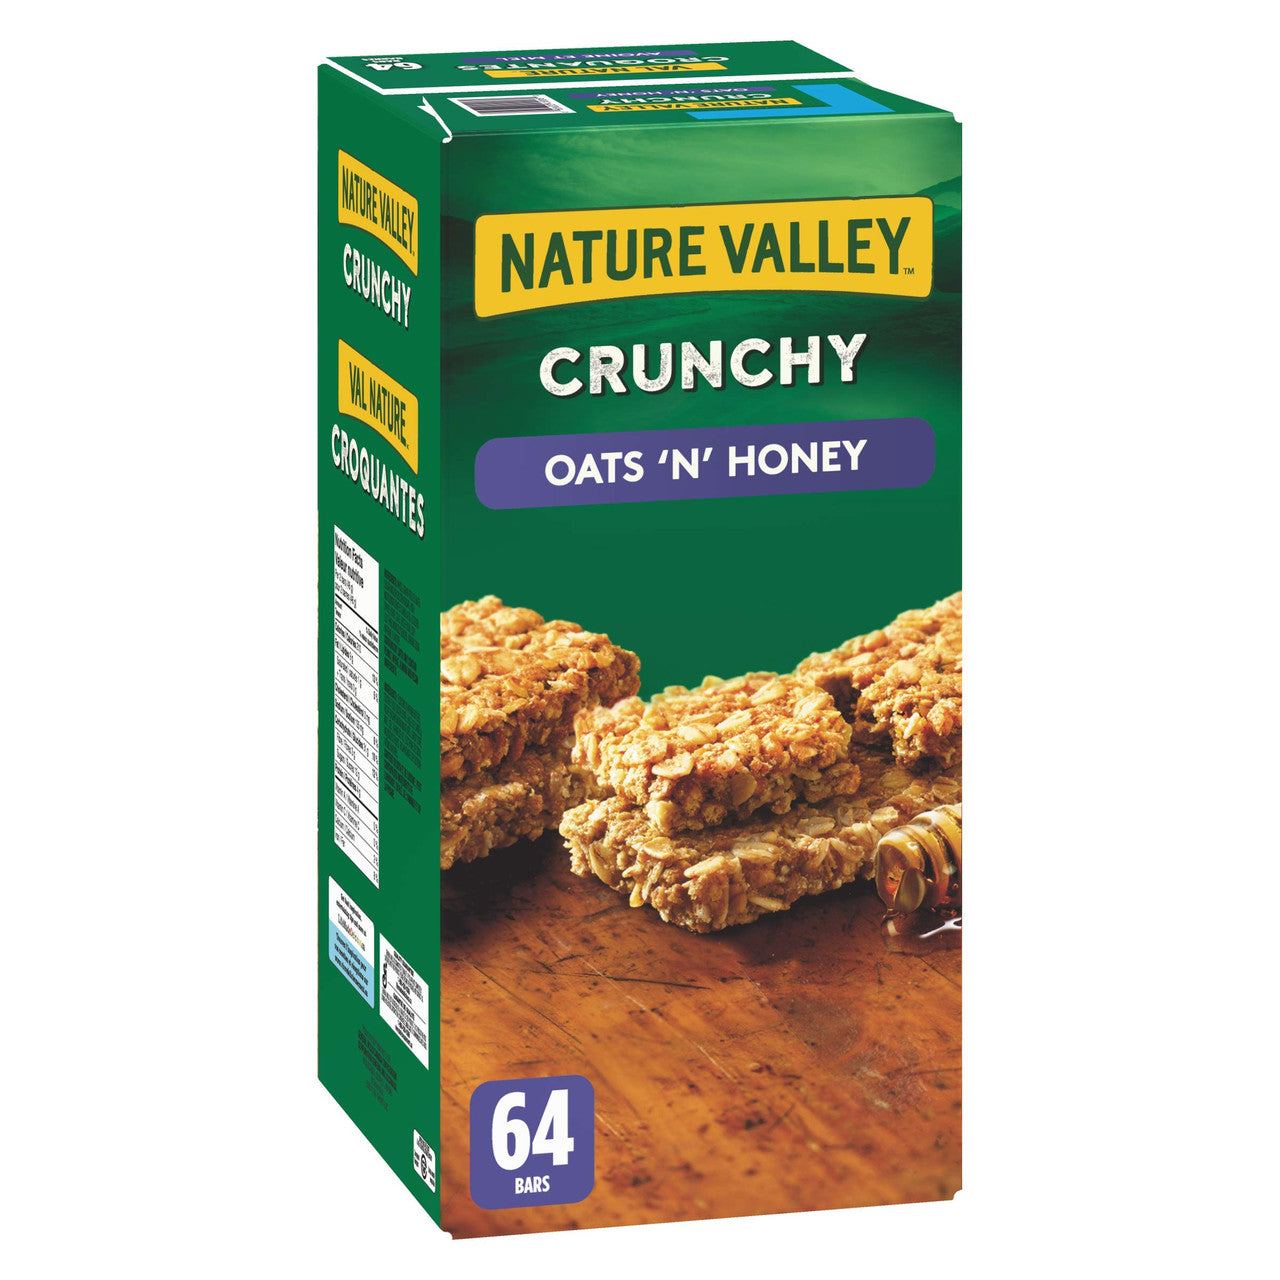 Nature Valley Oats 'n' Honey Crunchy, 64pk, 1.47kg/3.2 lbs., {Canadian}